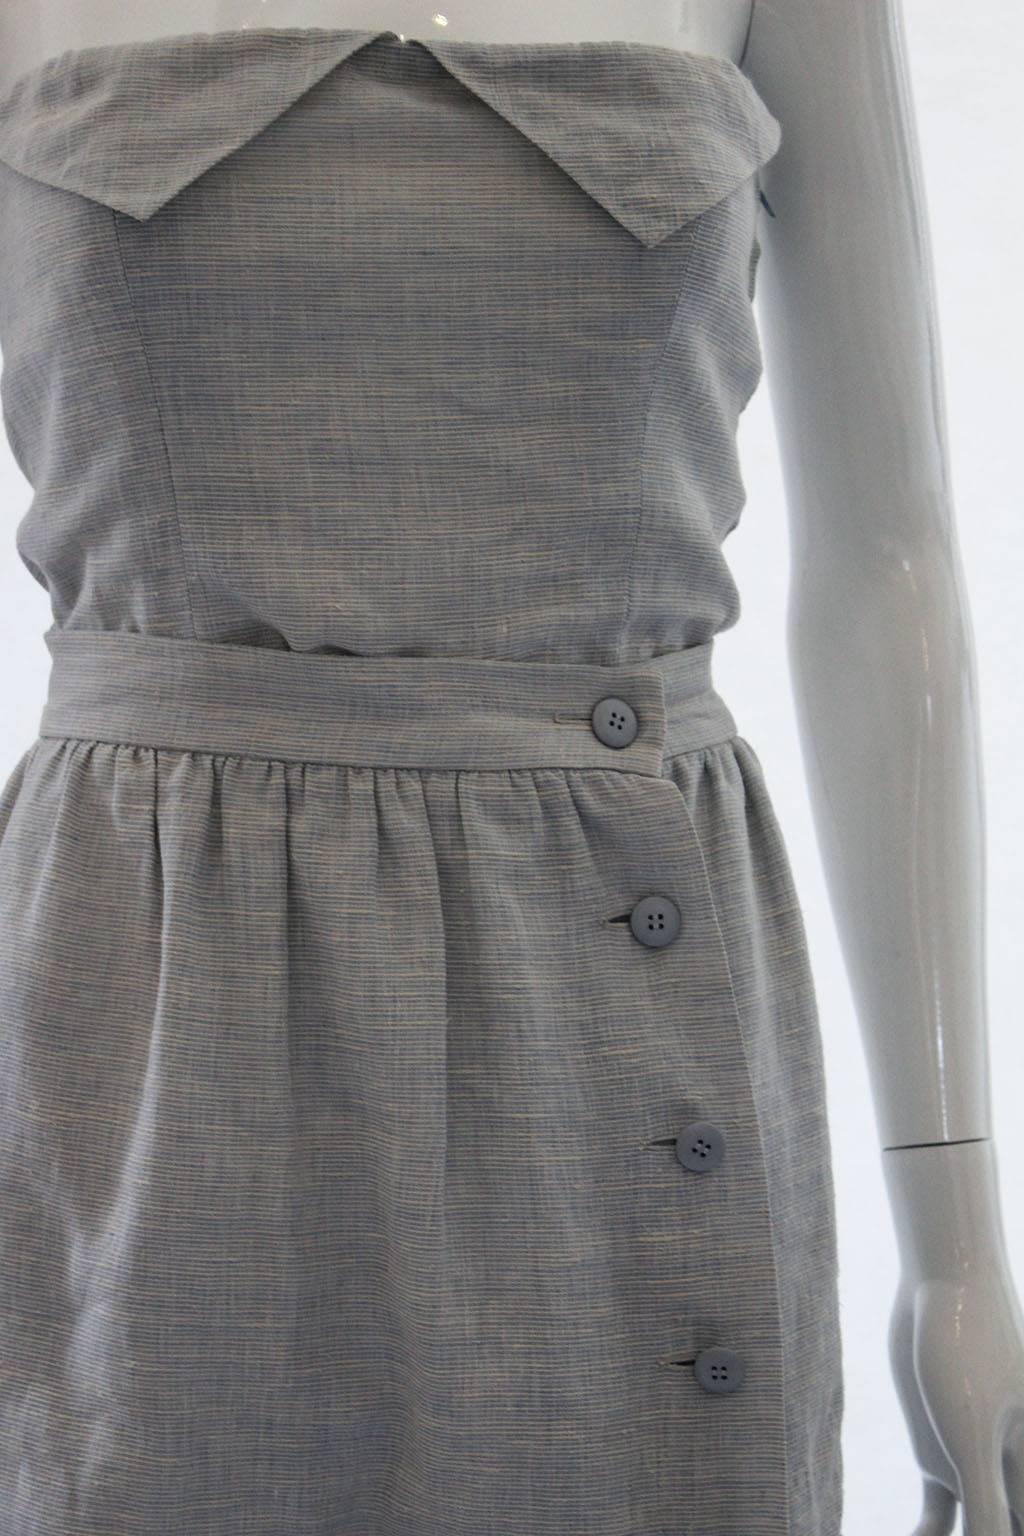 Women's Striking  Skirt and Bustier by Lanvin Paris.